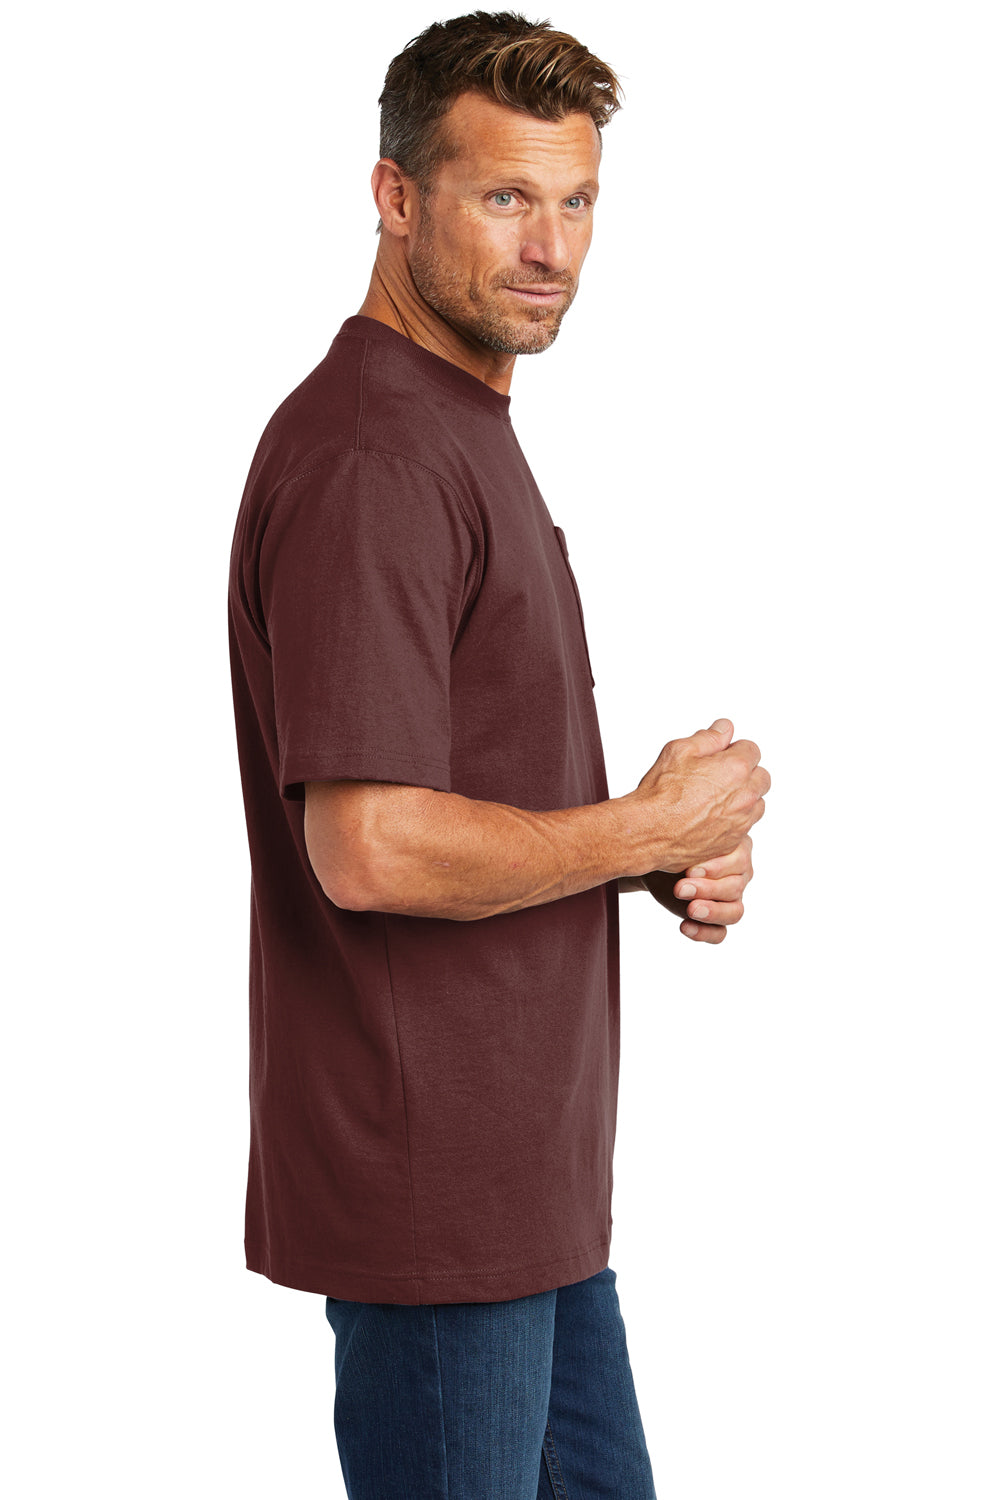 Carhartt CTK87 Mens Workwear Short Sleeve Crewneck T-Shirt w/ Pocket Port Red Side